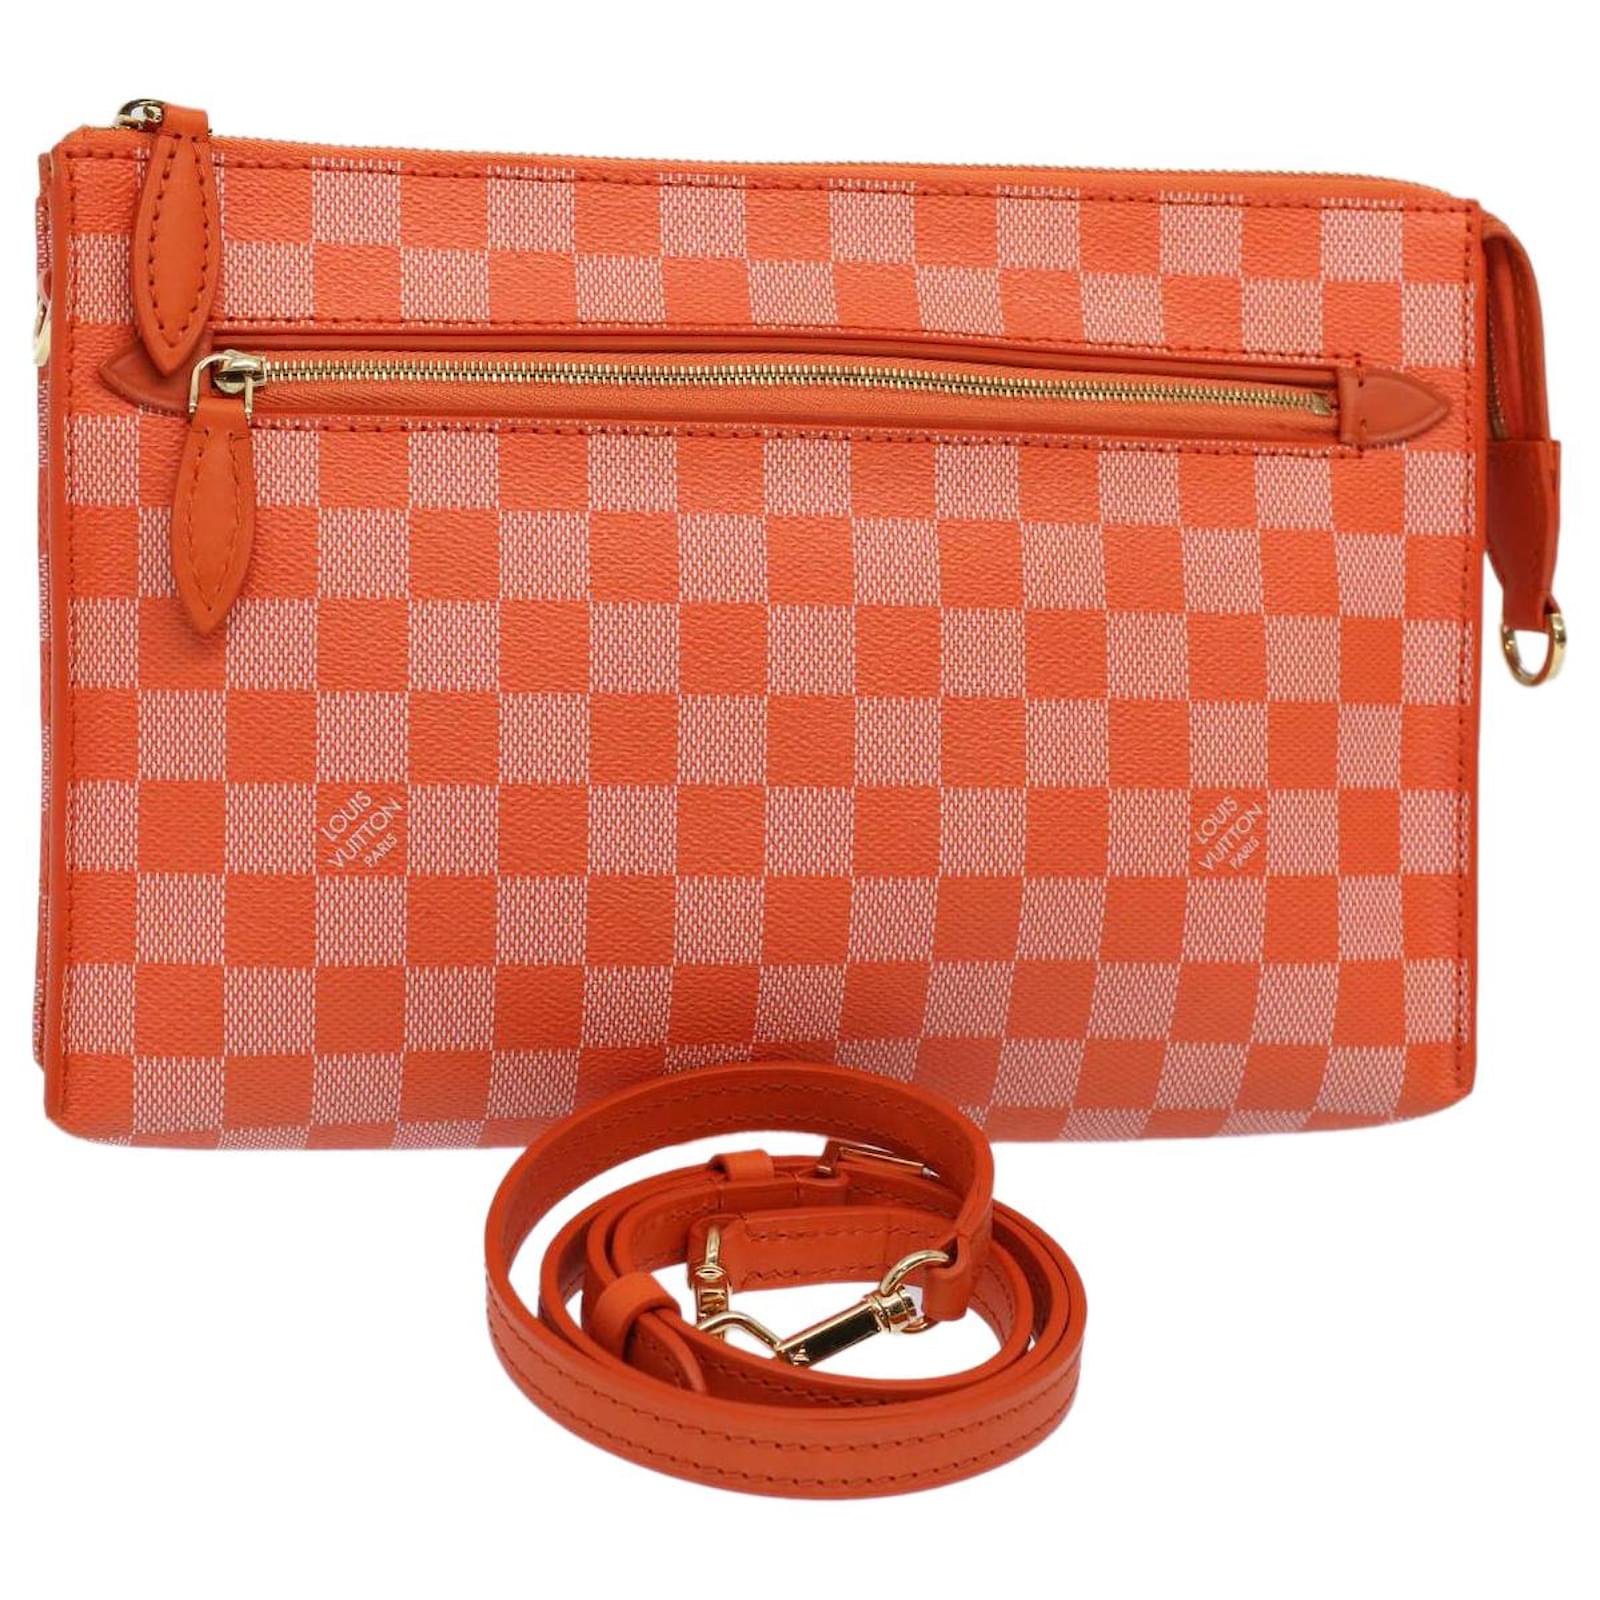 Neverfull GM Monogram - Women - Handbags | LOUIS VUITTON ®